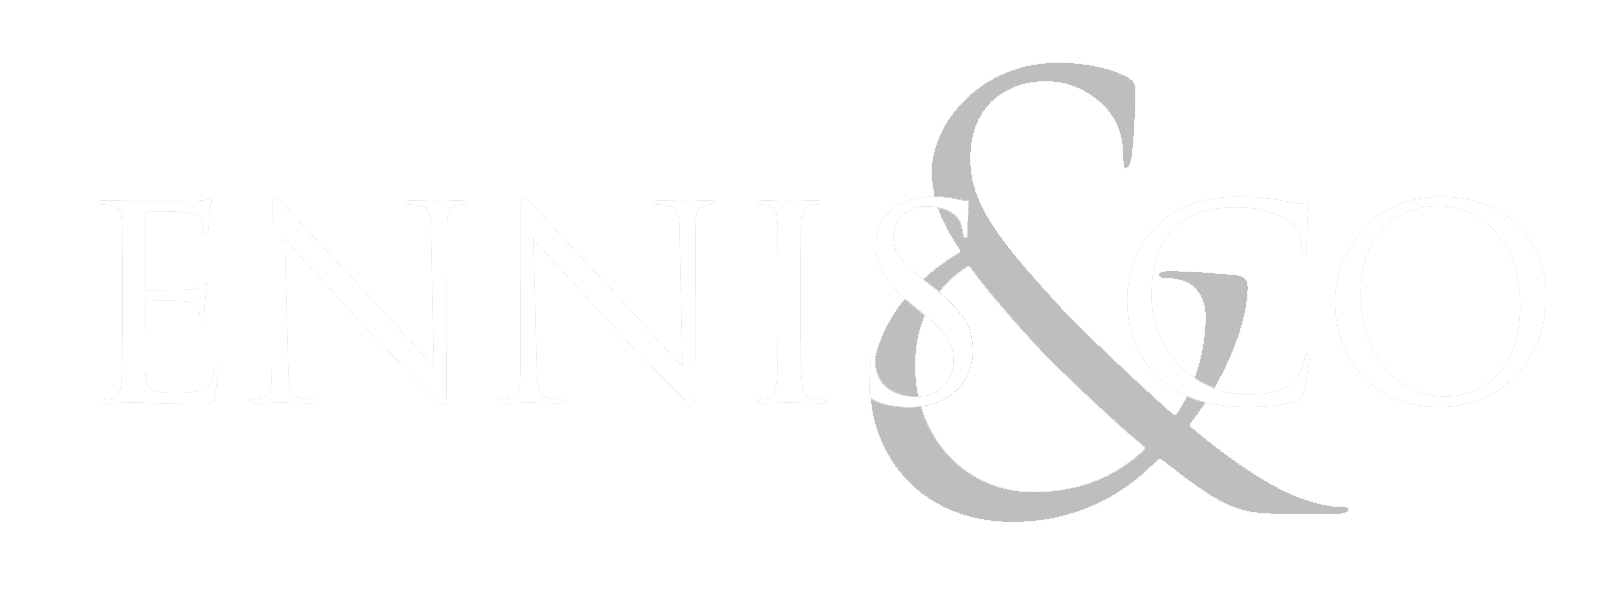 Ennis & Co Group web logo